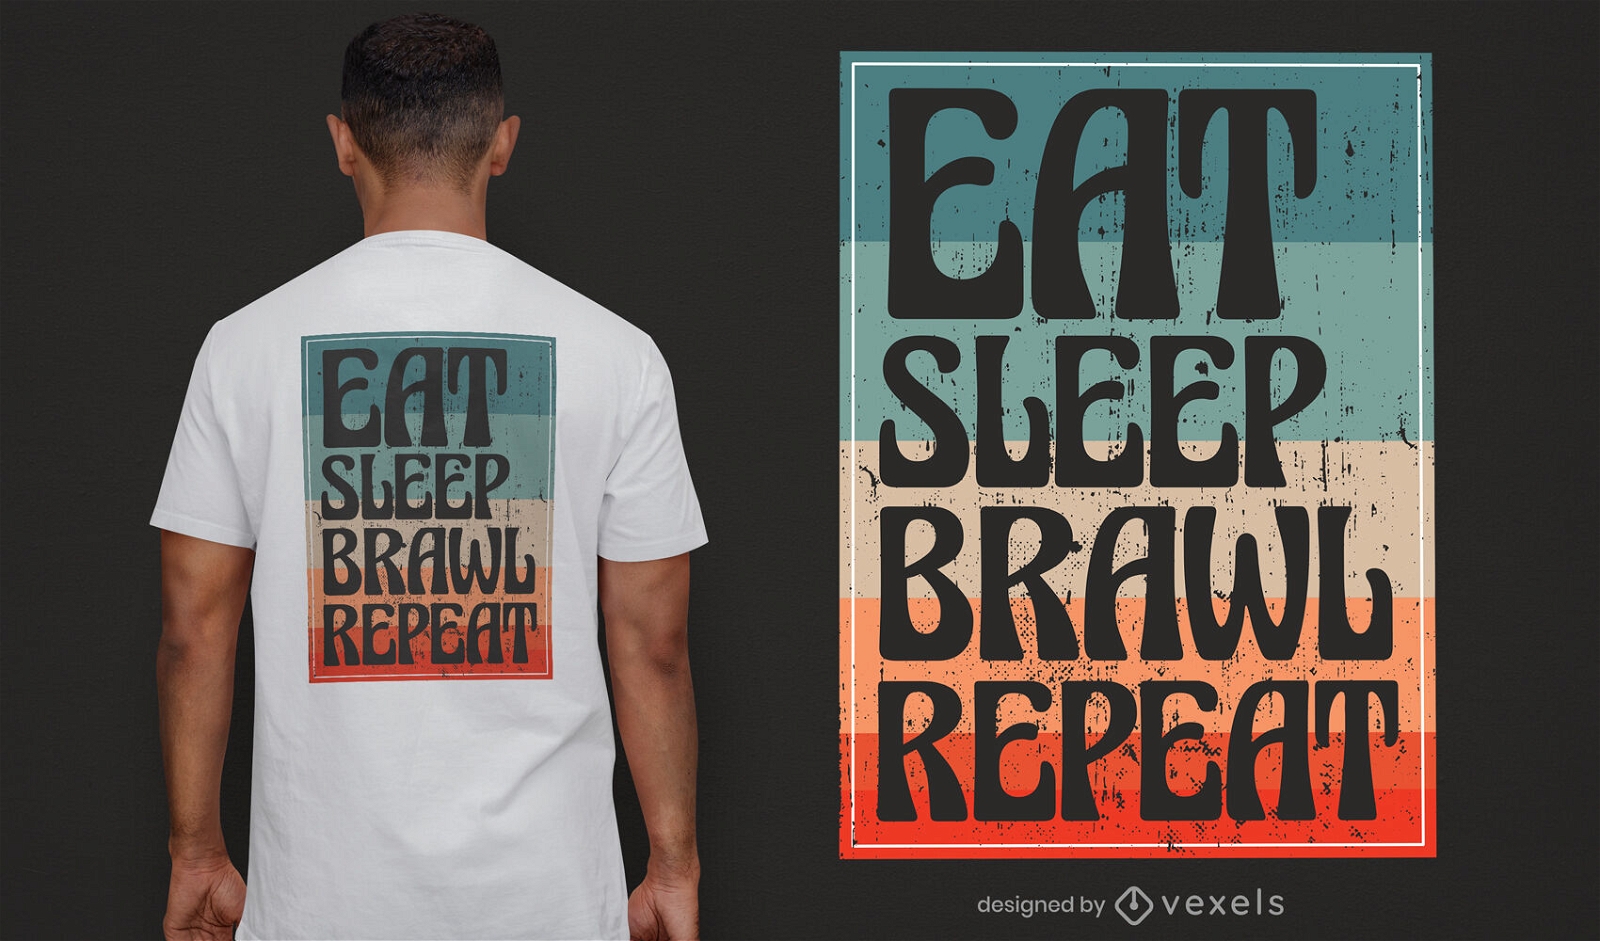 Eat Sleep Brawl Repetir dise?o de camiseta